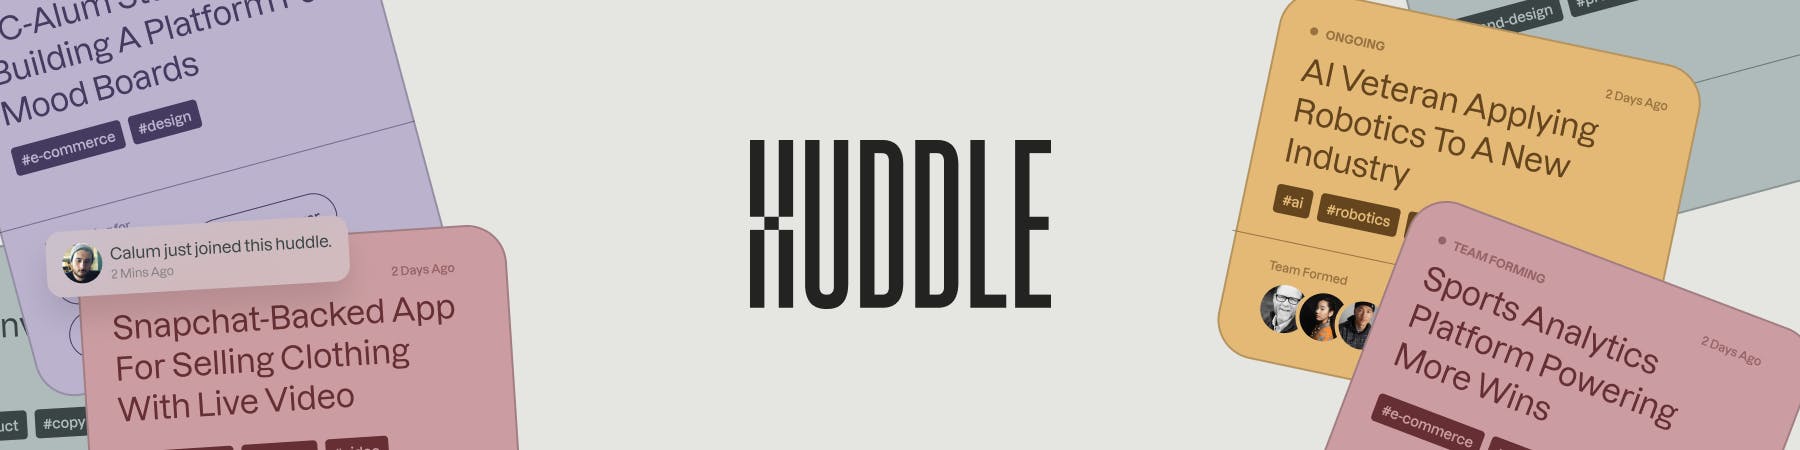 Huddle media 1